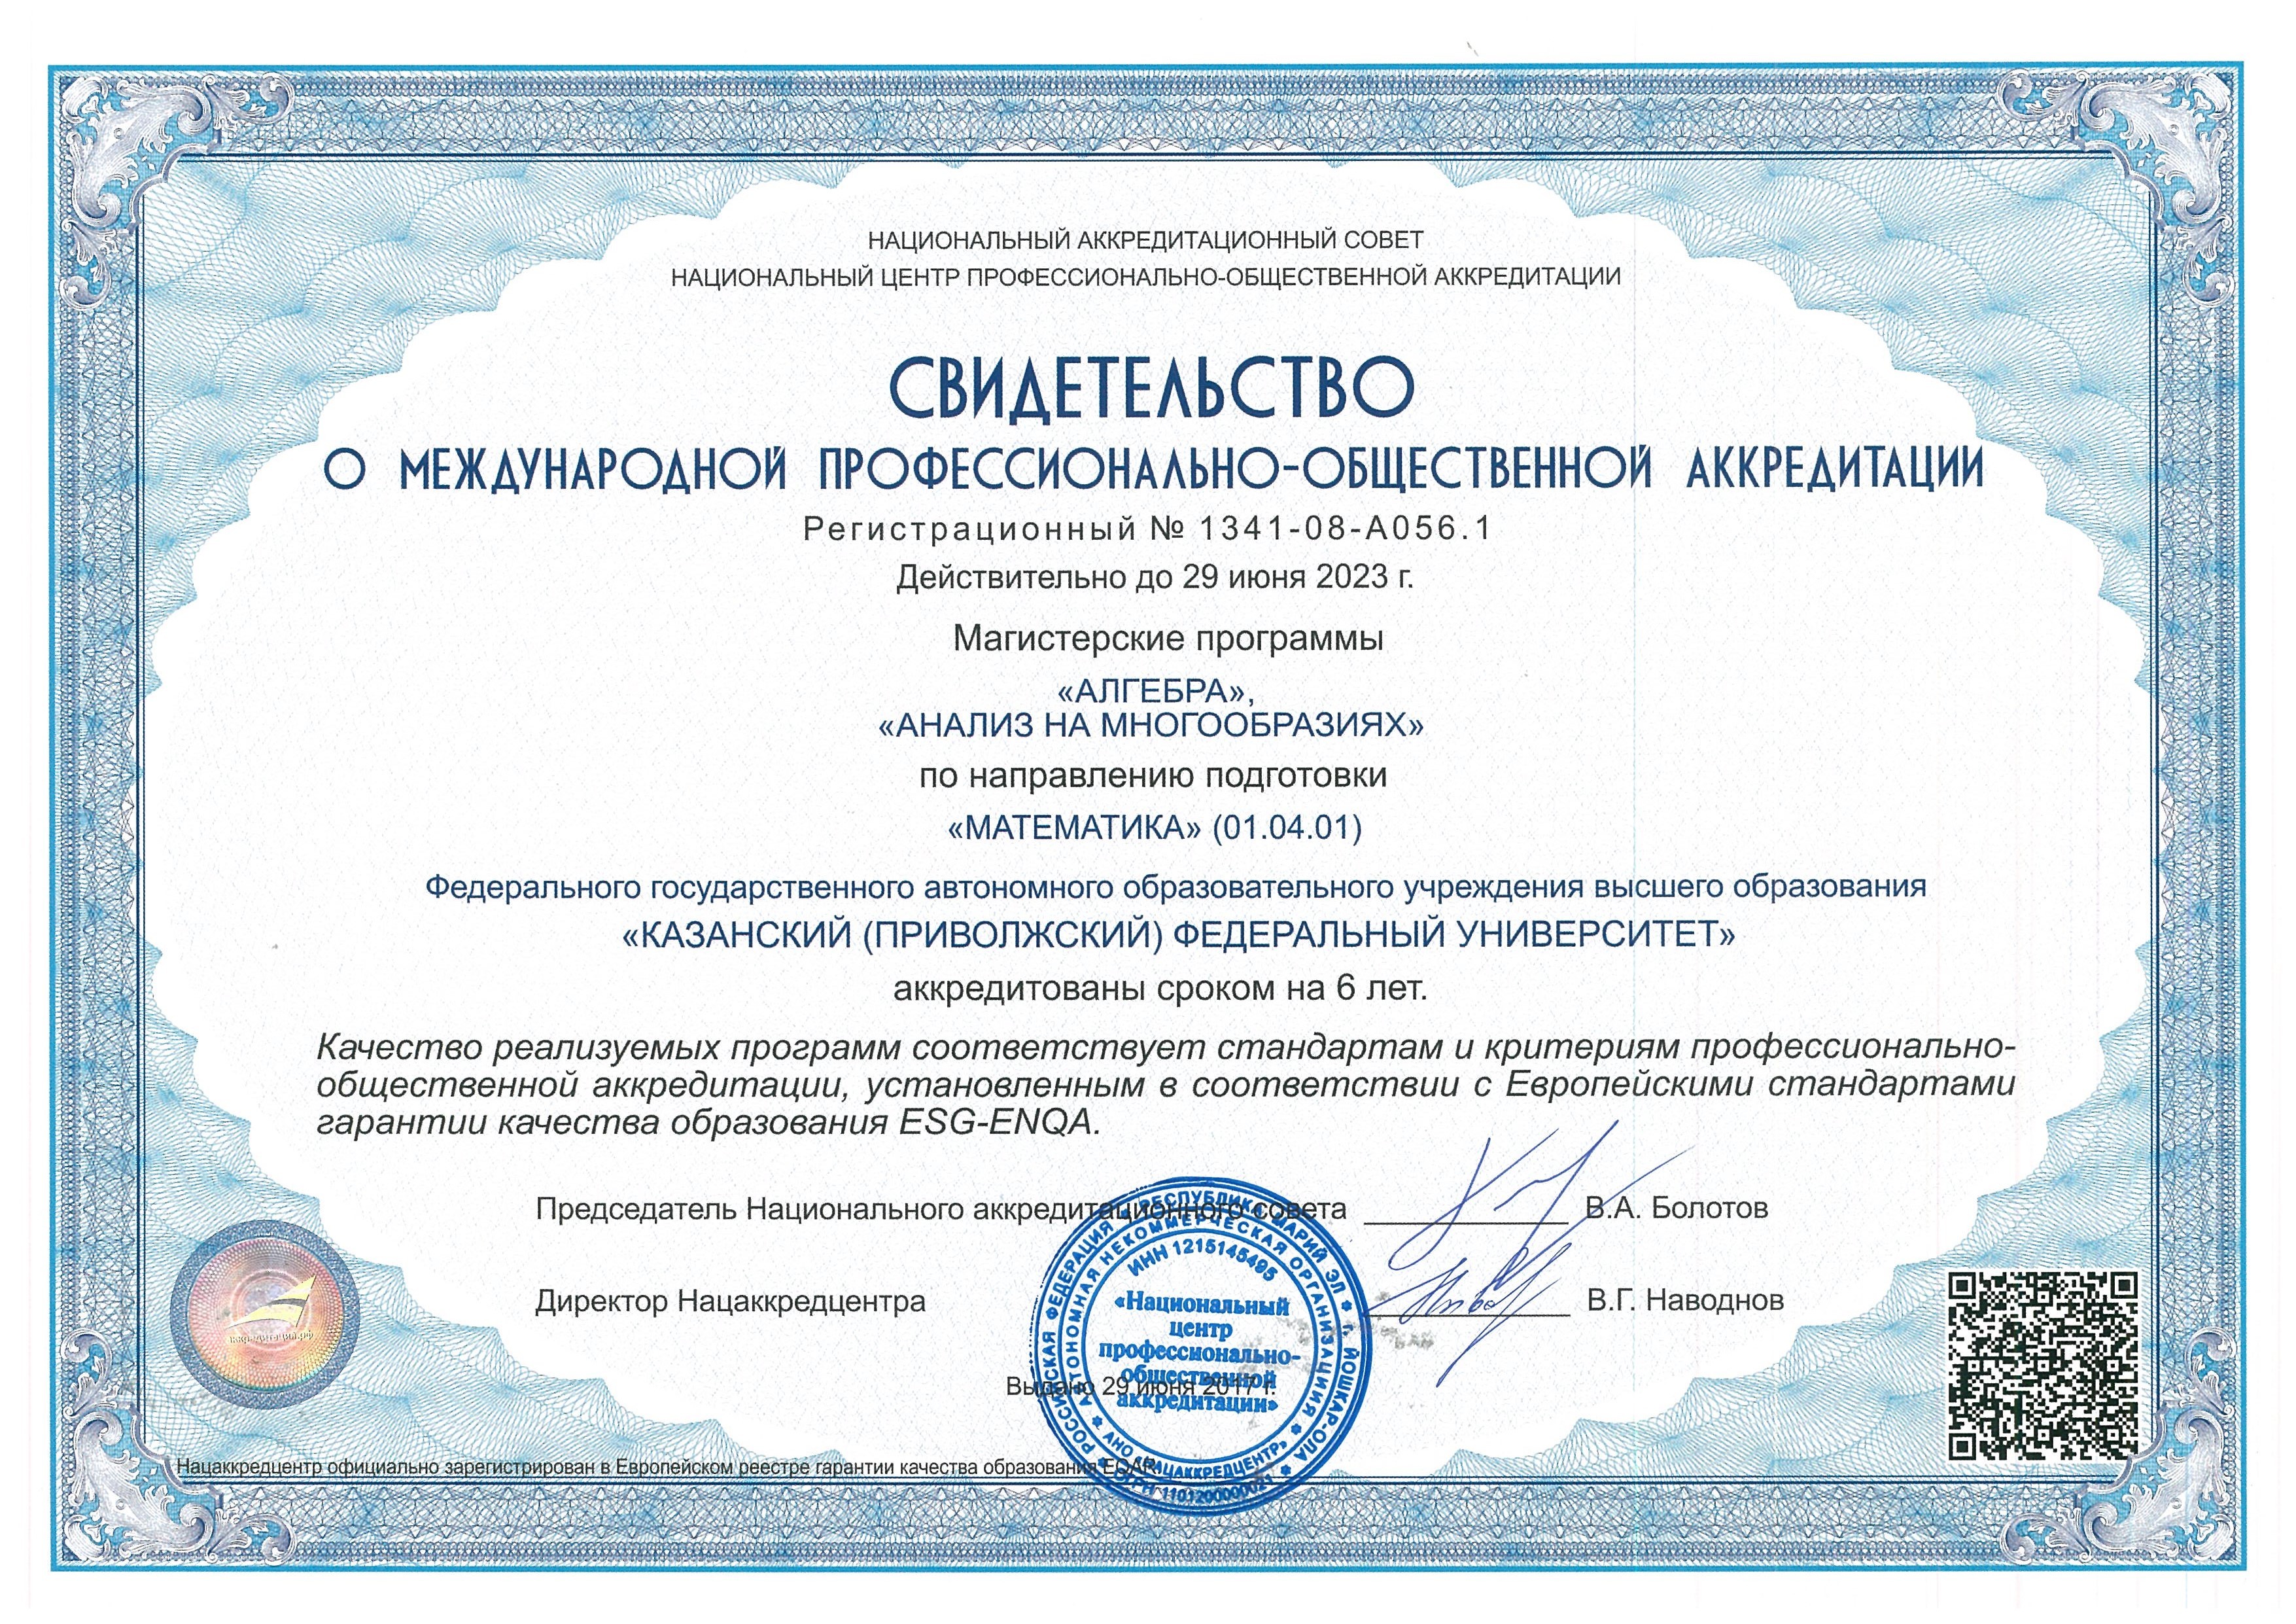 Ultrasonic check Accreditation Certificate. Аккредитация средних результаты